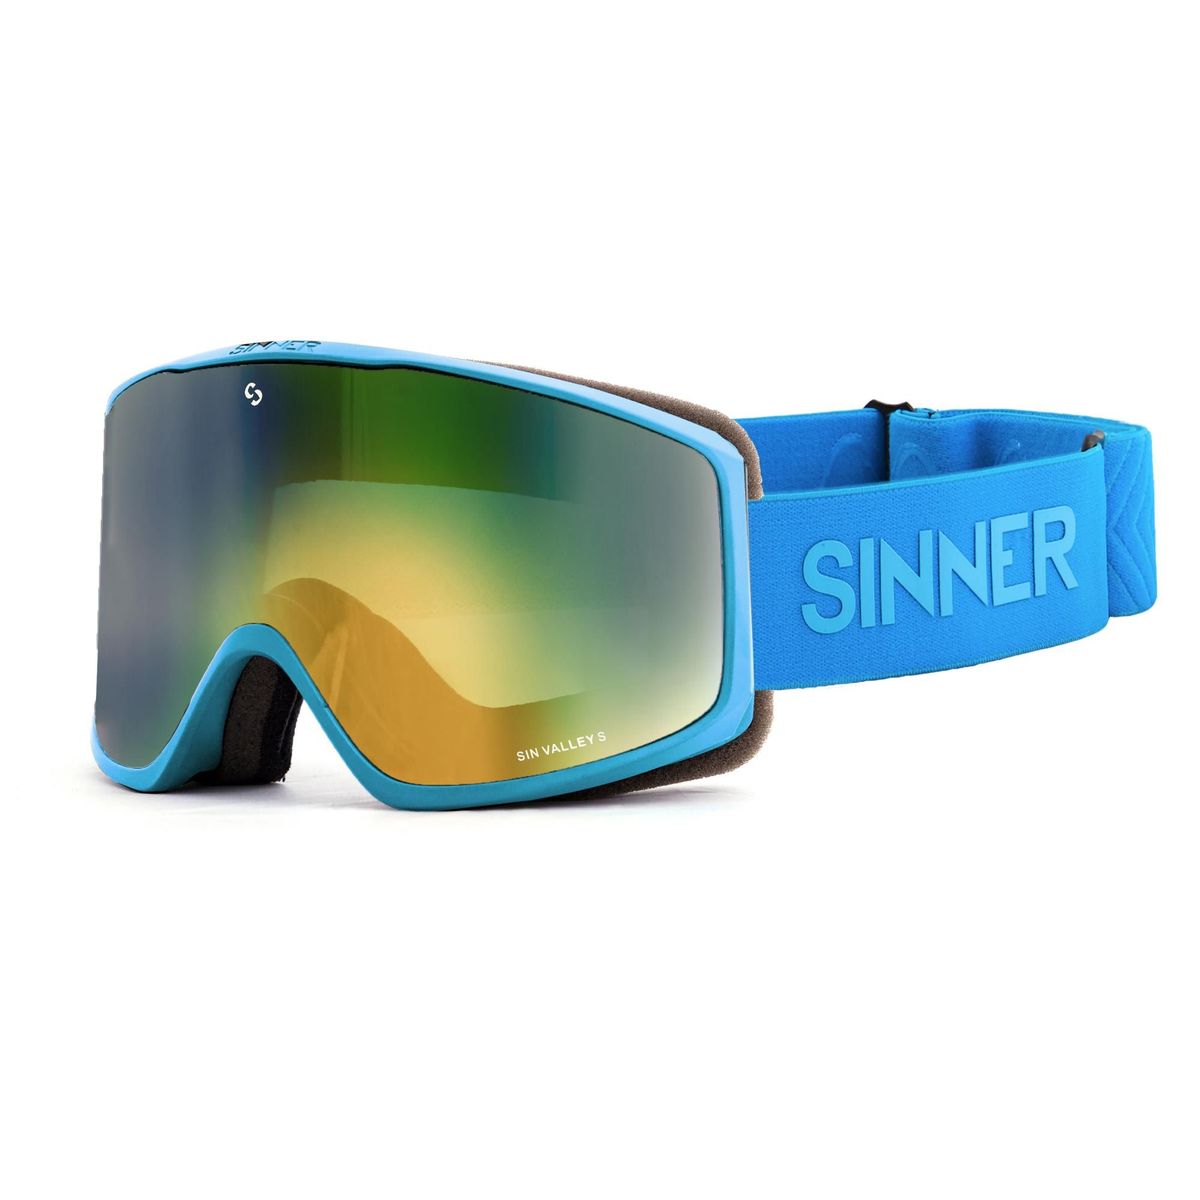 Sinner SIN VALLEY S skibril mat blauw/groen + extra roze S1 lens